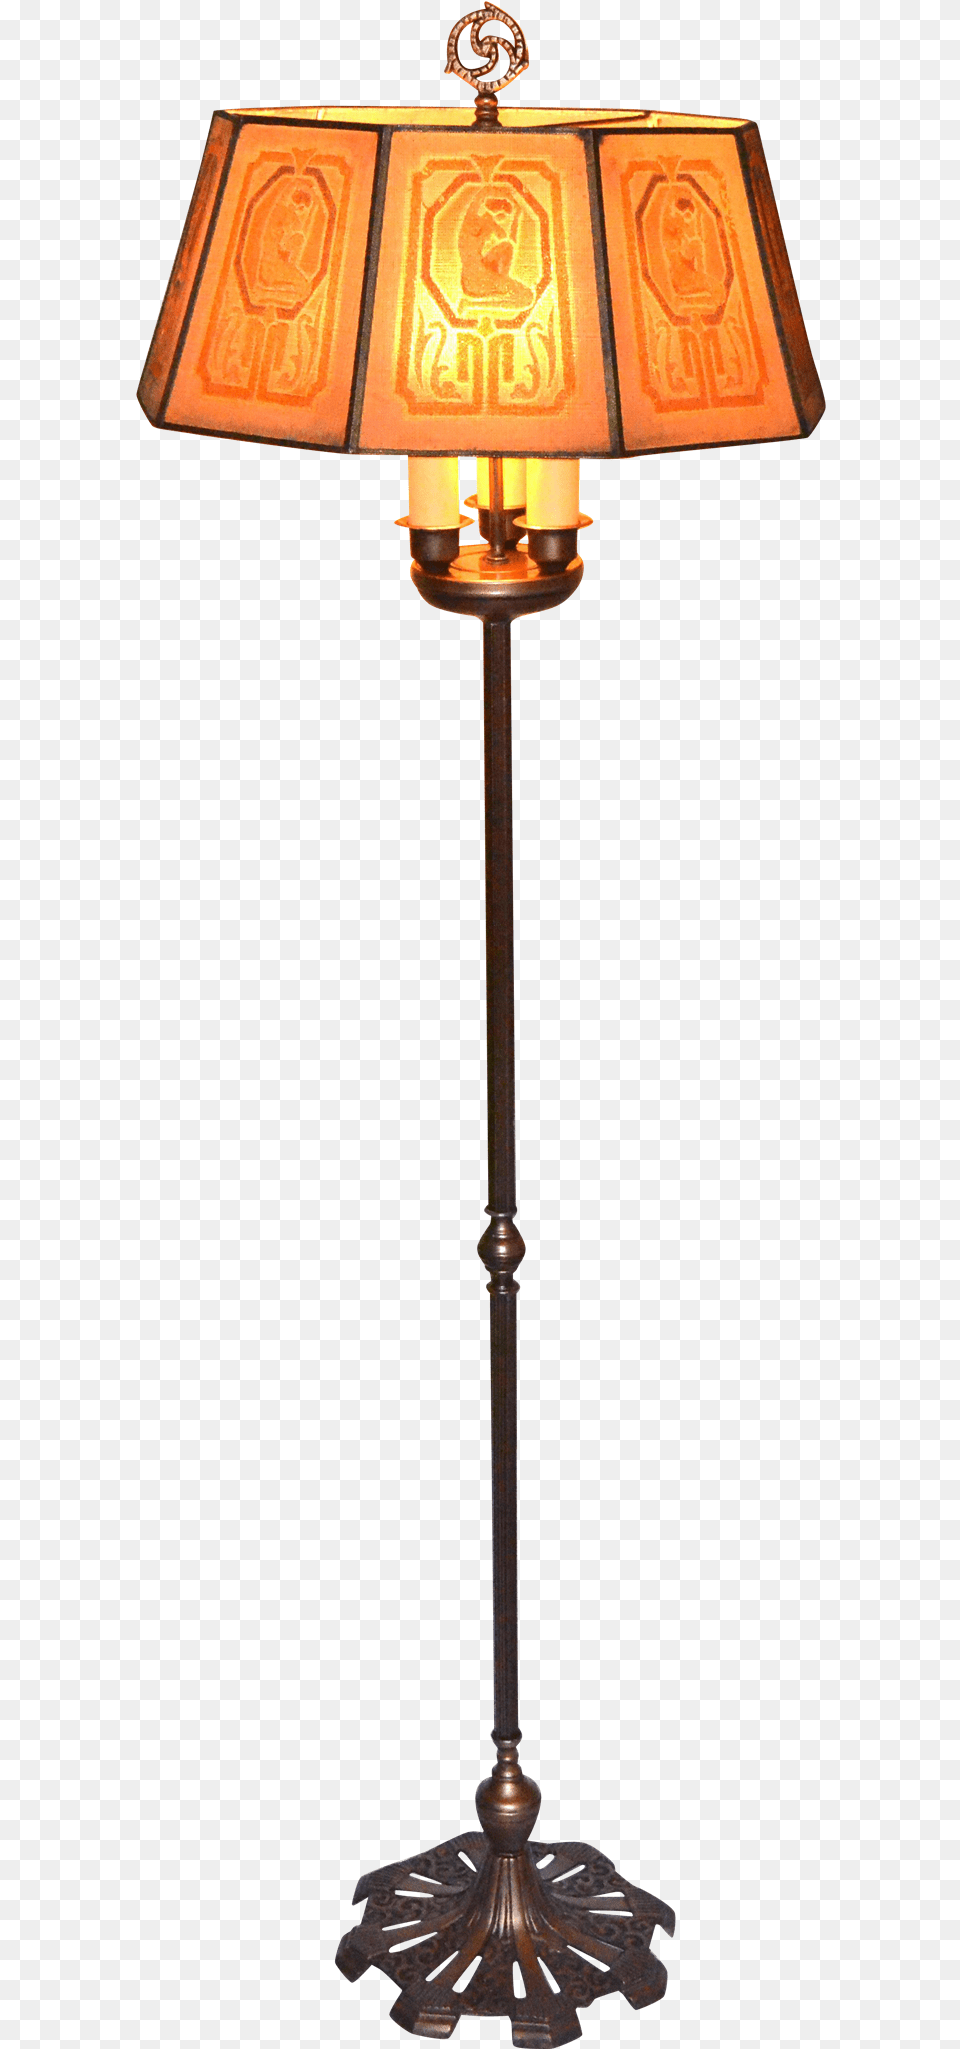 Lamp, Lampshade Png Image